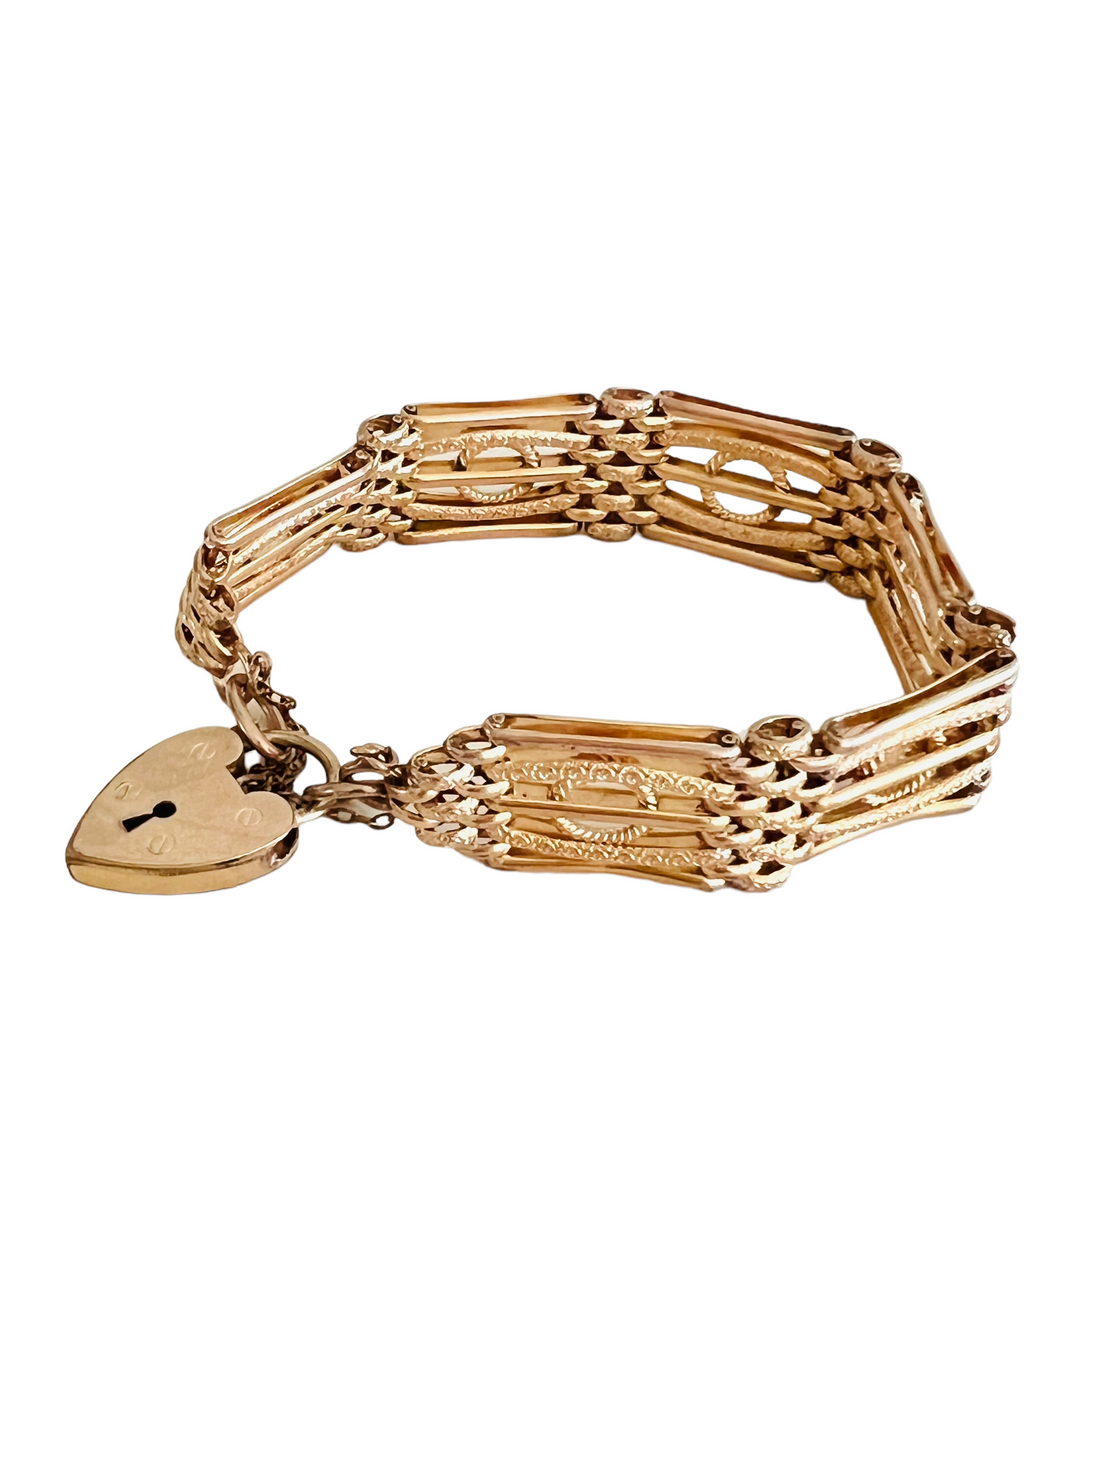 Victorian 9ct Rolled Gold Gate Bracelet